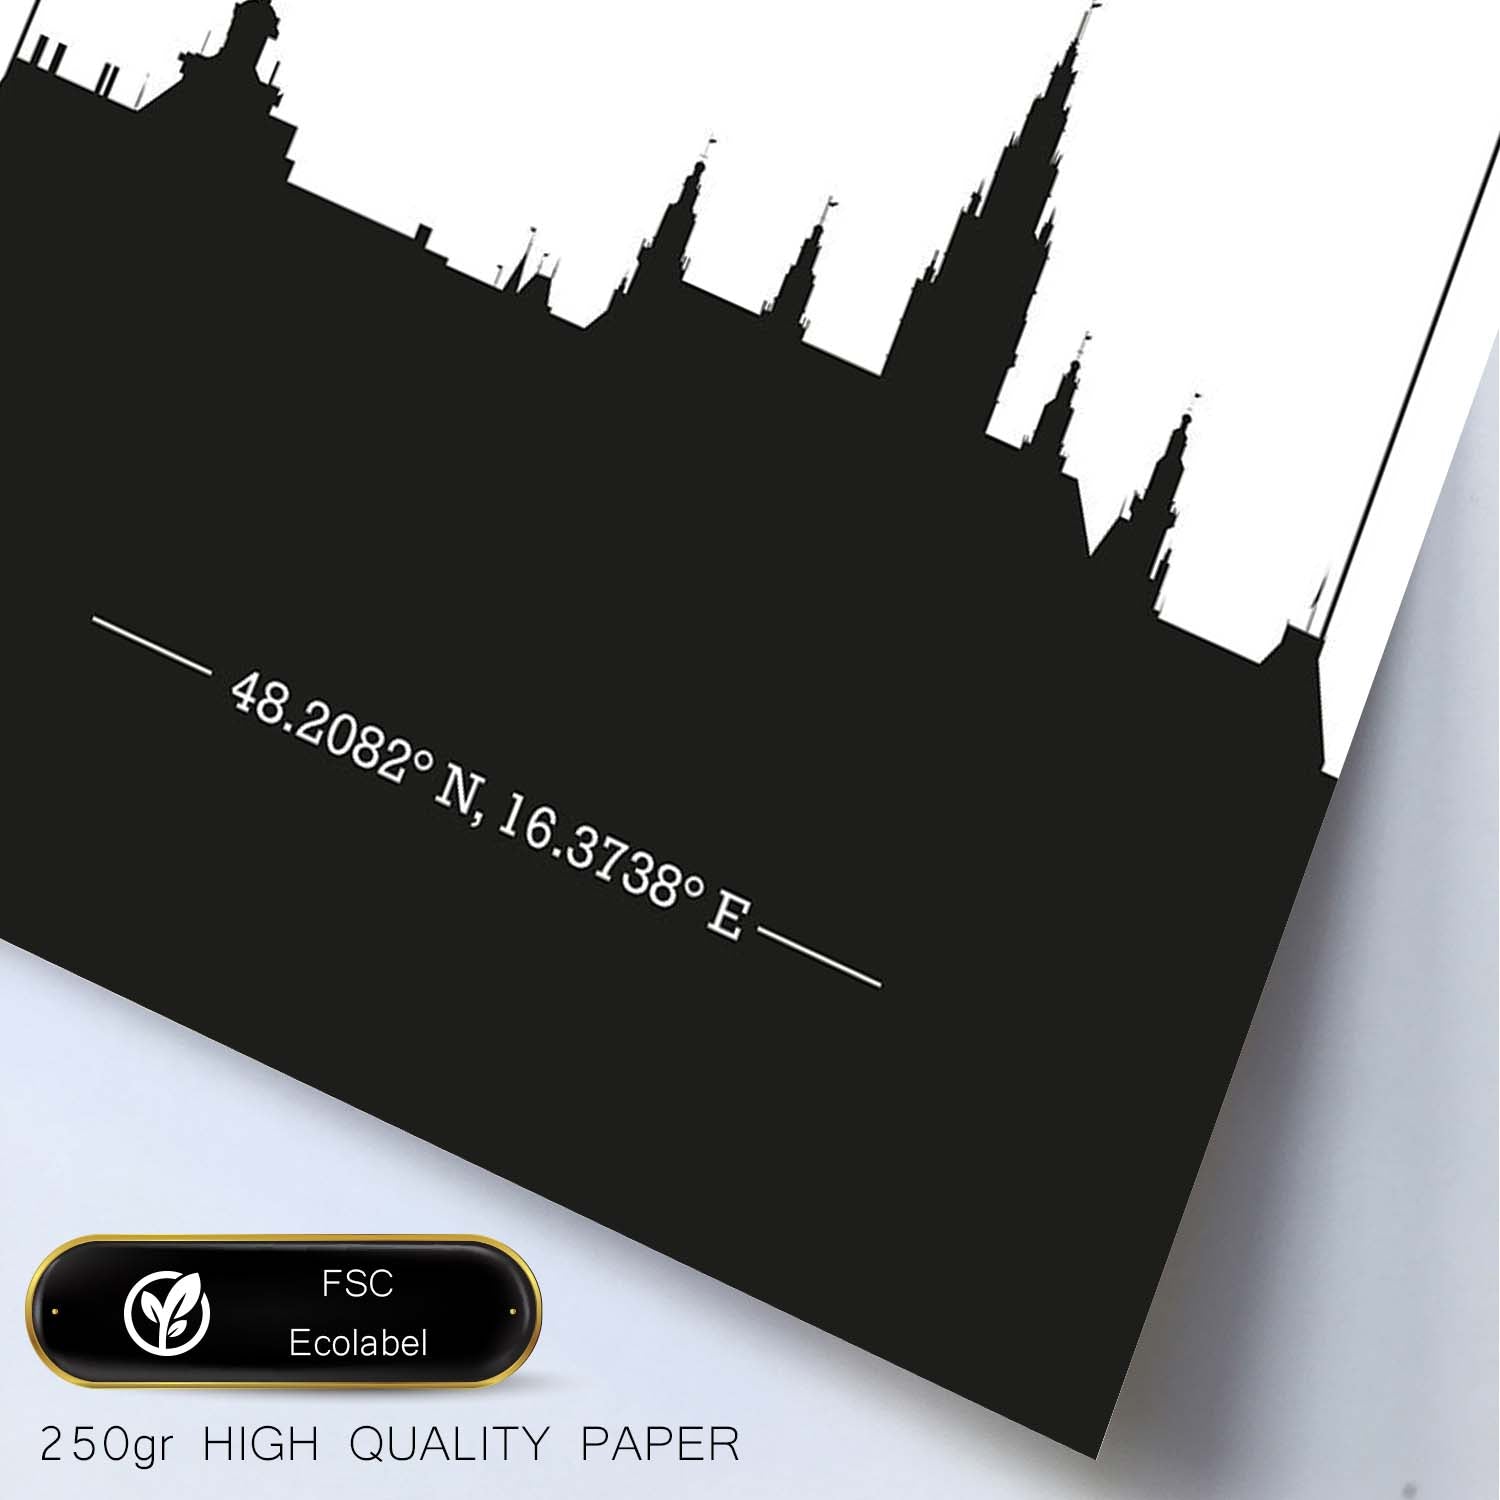 Poster con mapa de Vienna - Austria. Láminas con Skyline de ciudades de Europa con sombra negra.-Artwork-Nacnic-Nacnic Estudio SL